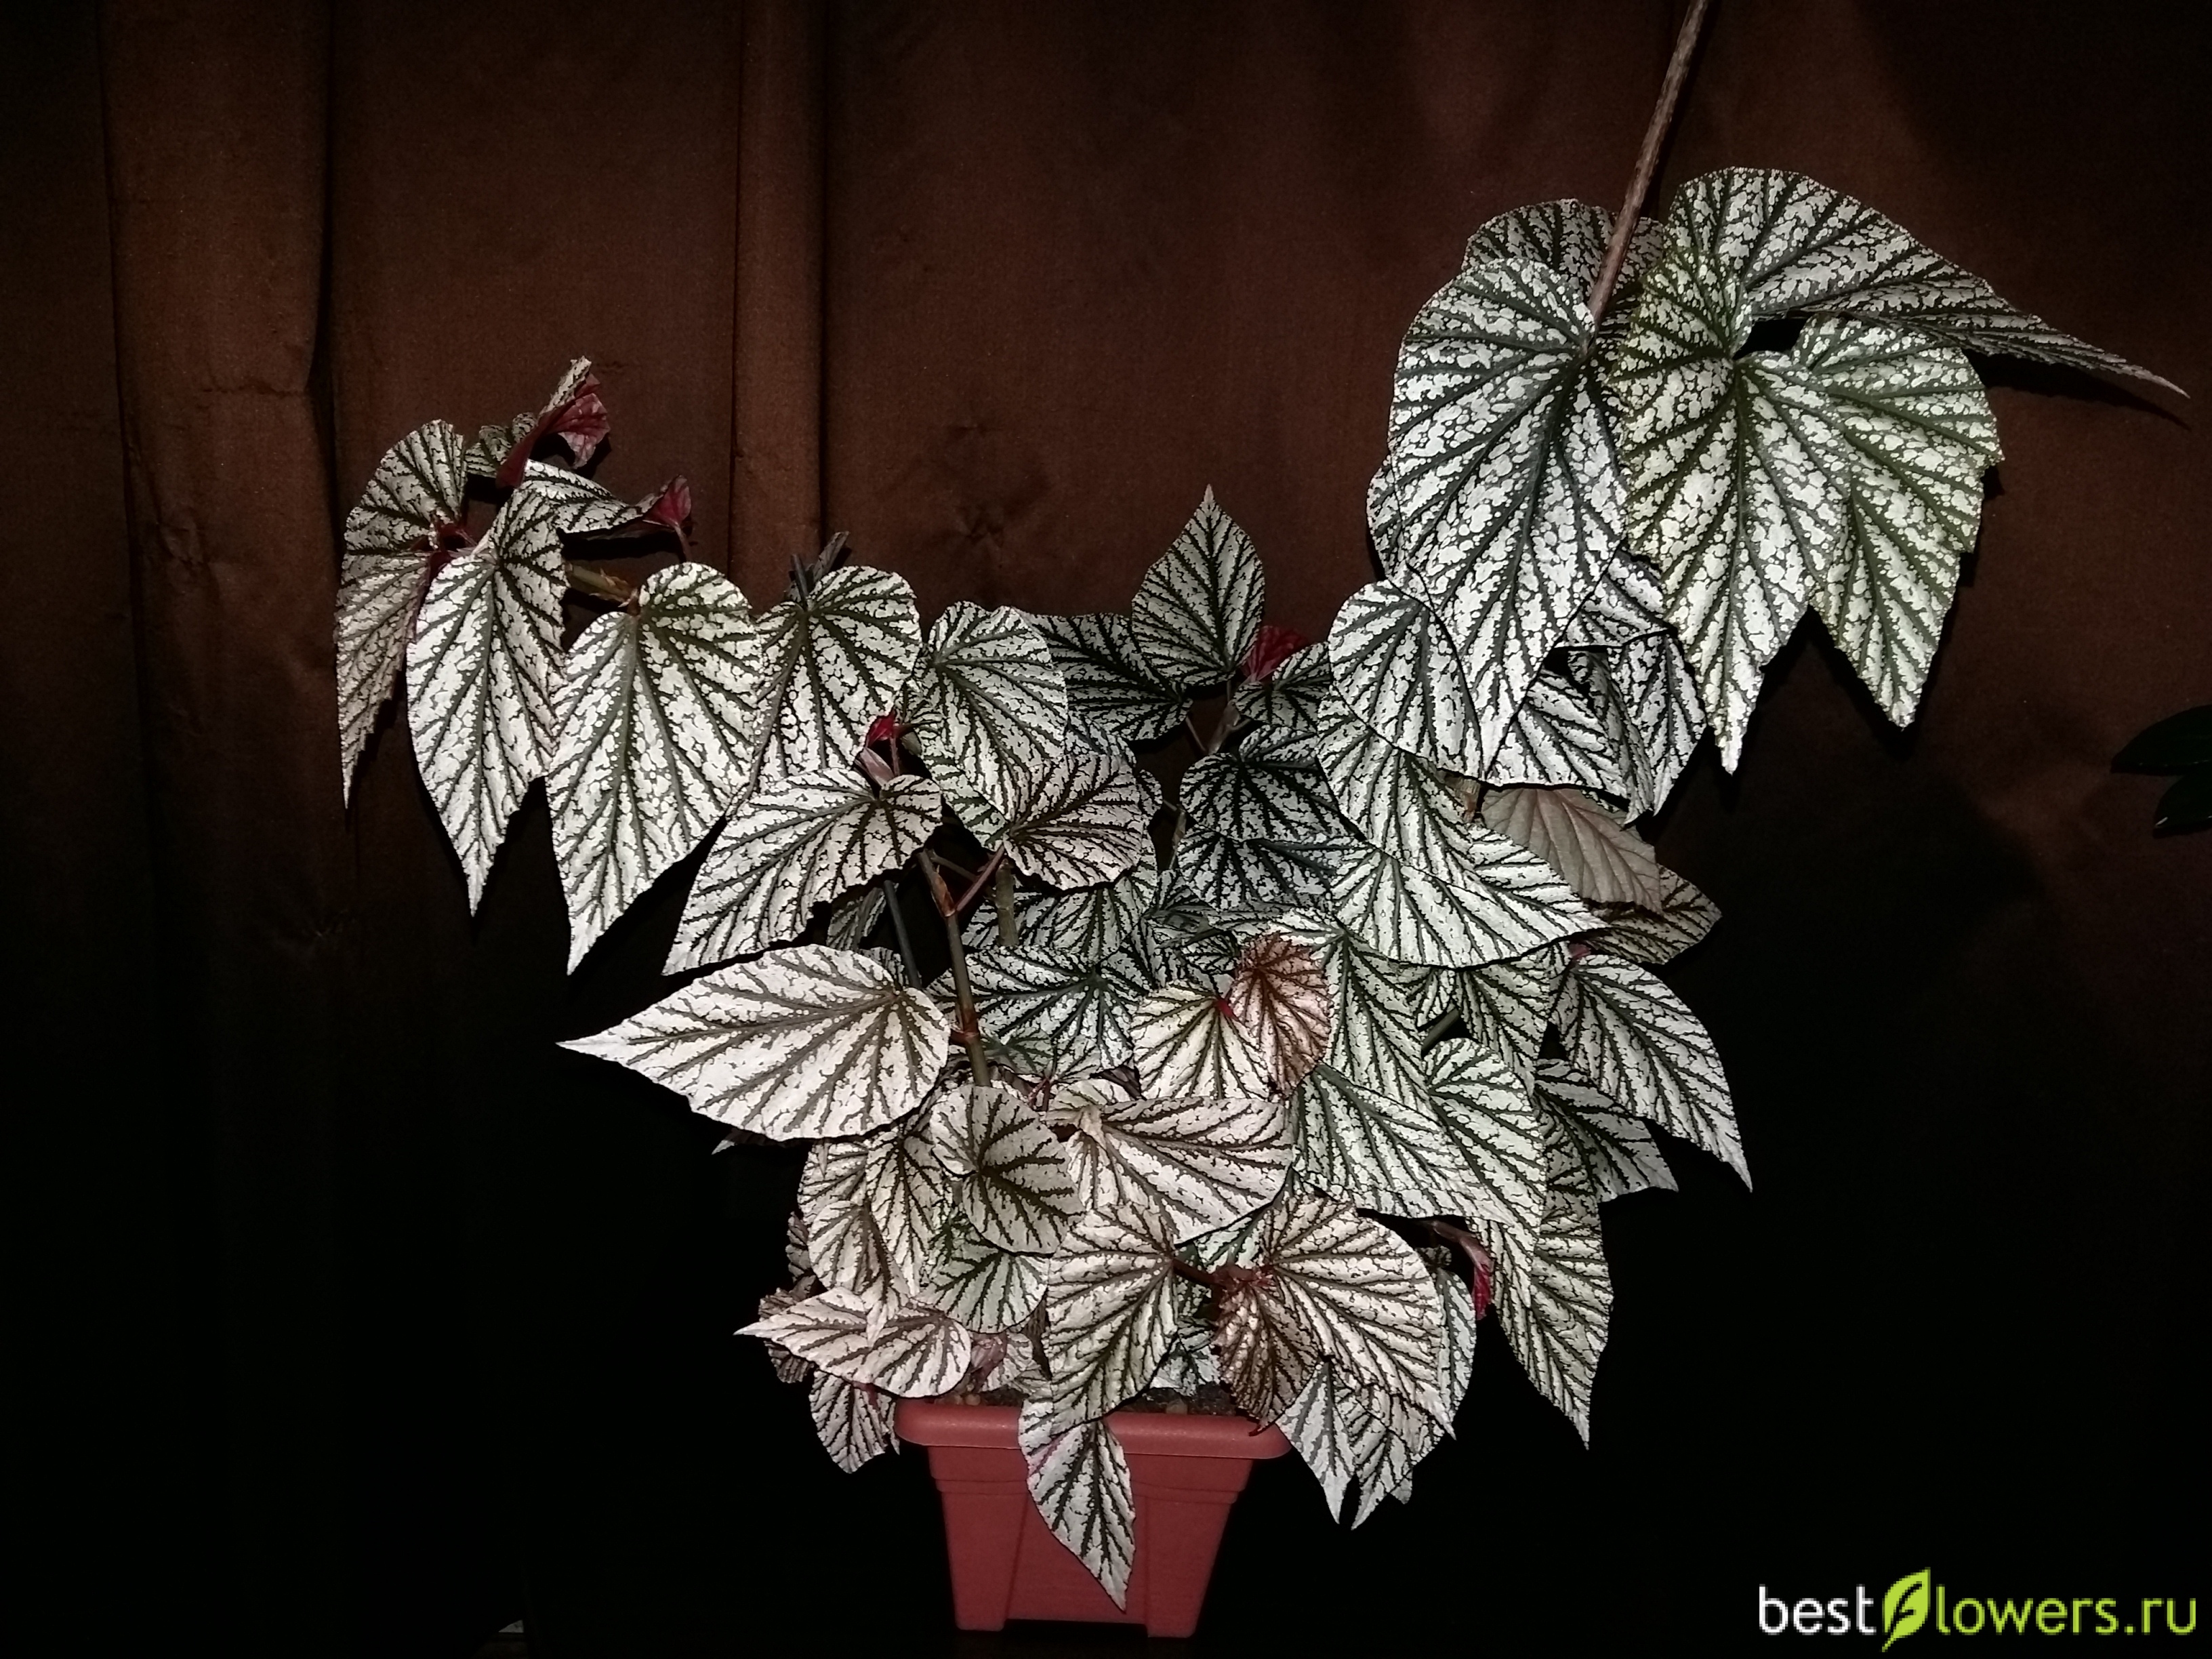 Begonia argenteo-guttata бегония серебристо-крапчатая